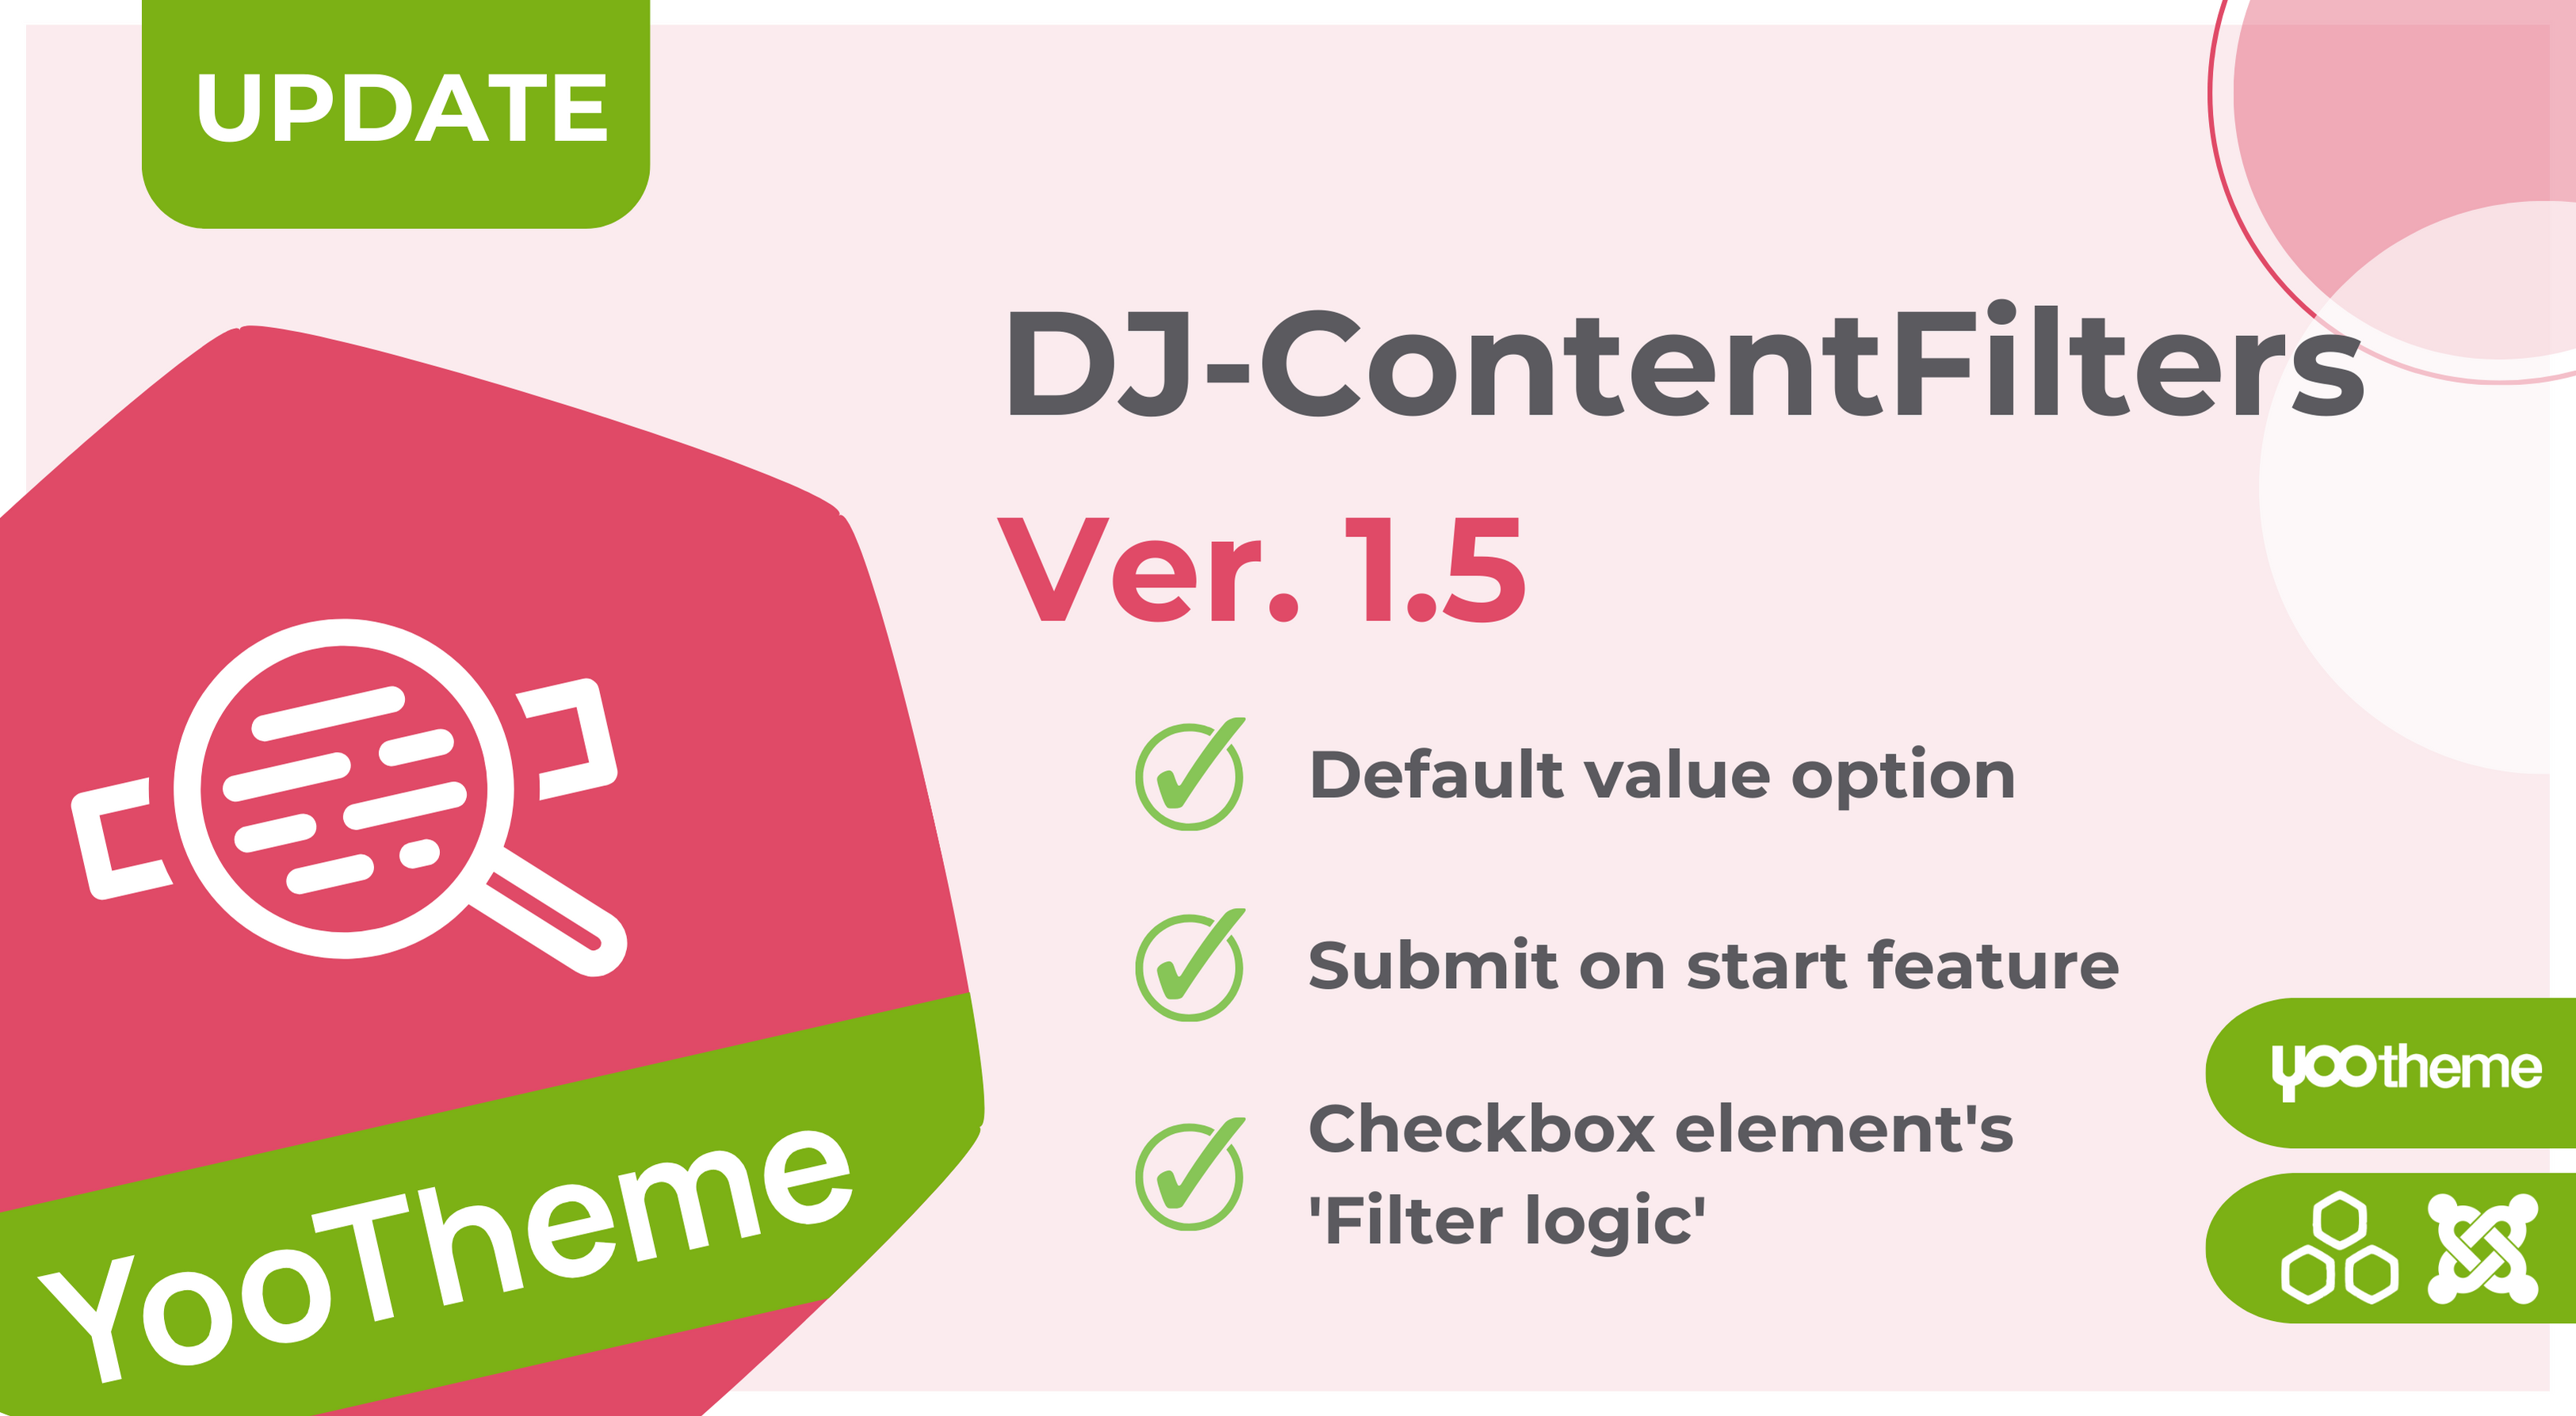 DJ-ContentFilters 1.5 version